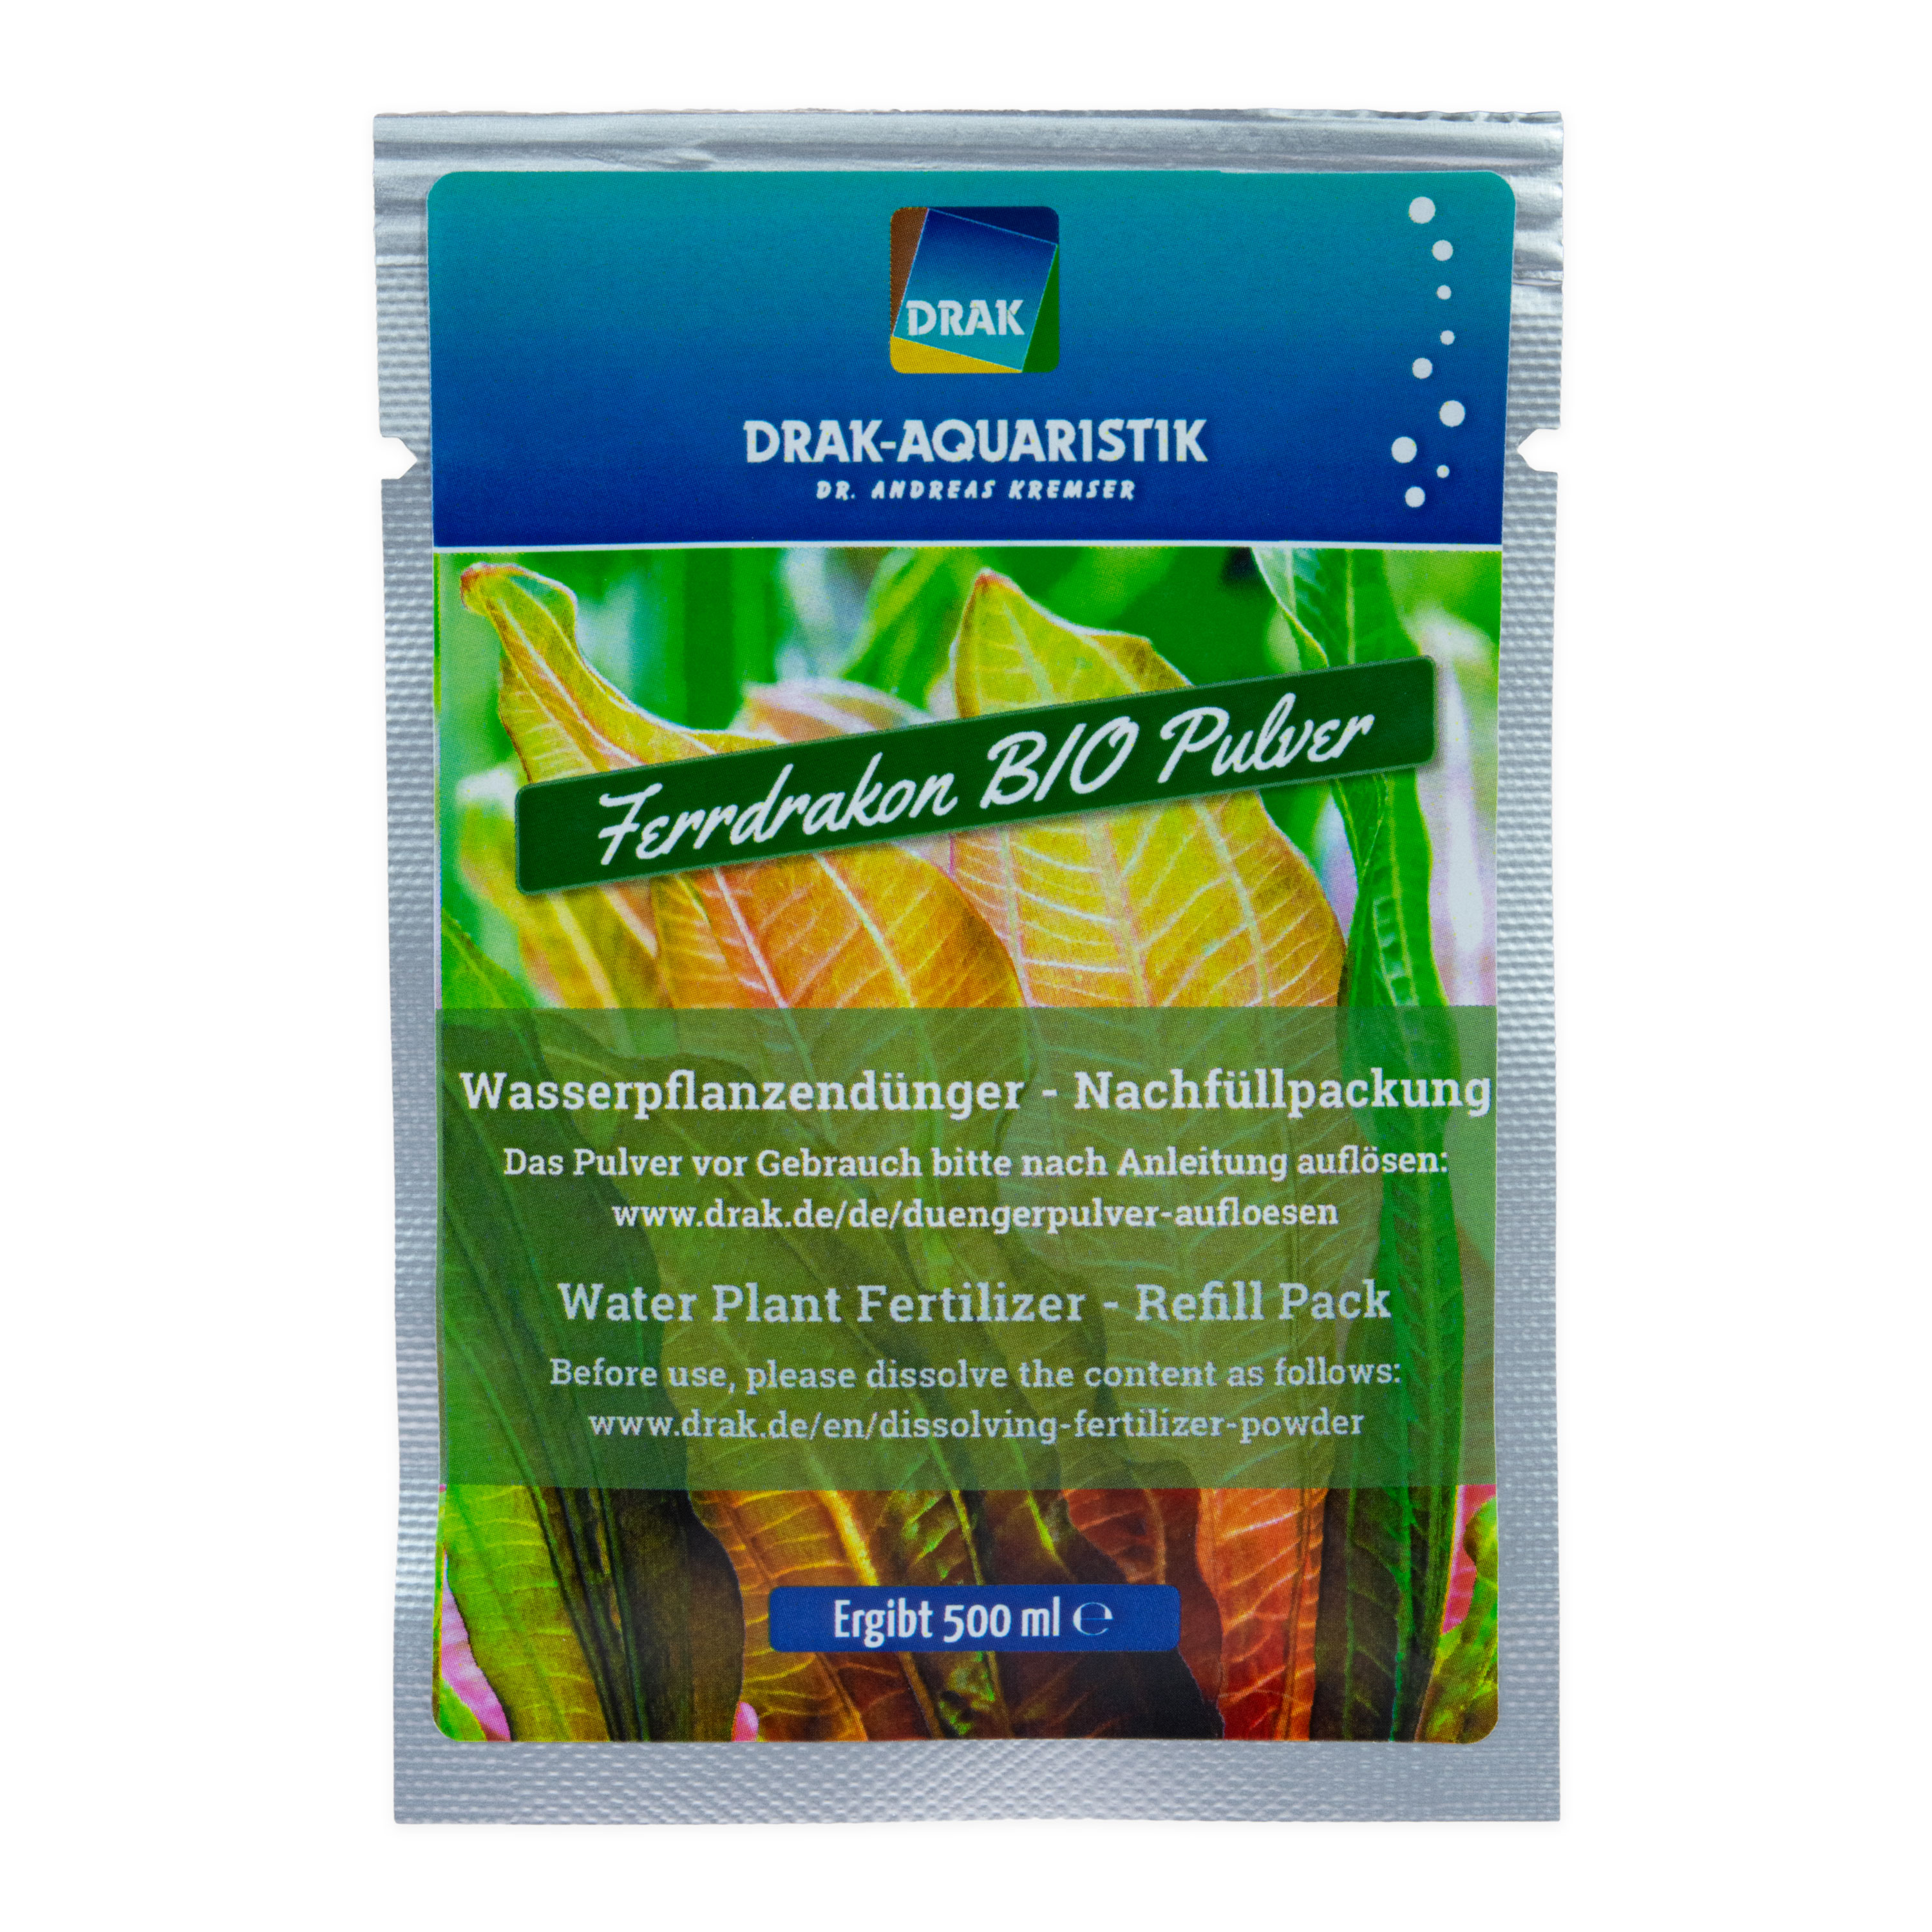 Ferrdrakon BIO Water Plant Fertilizer 500 ml Refill